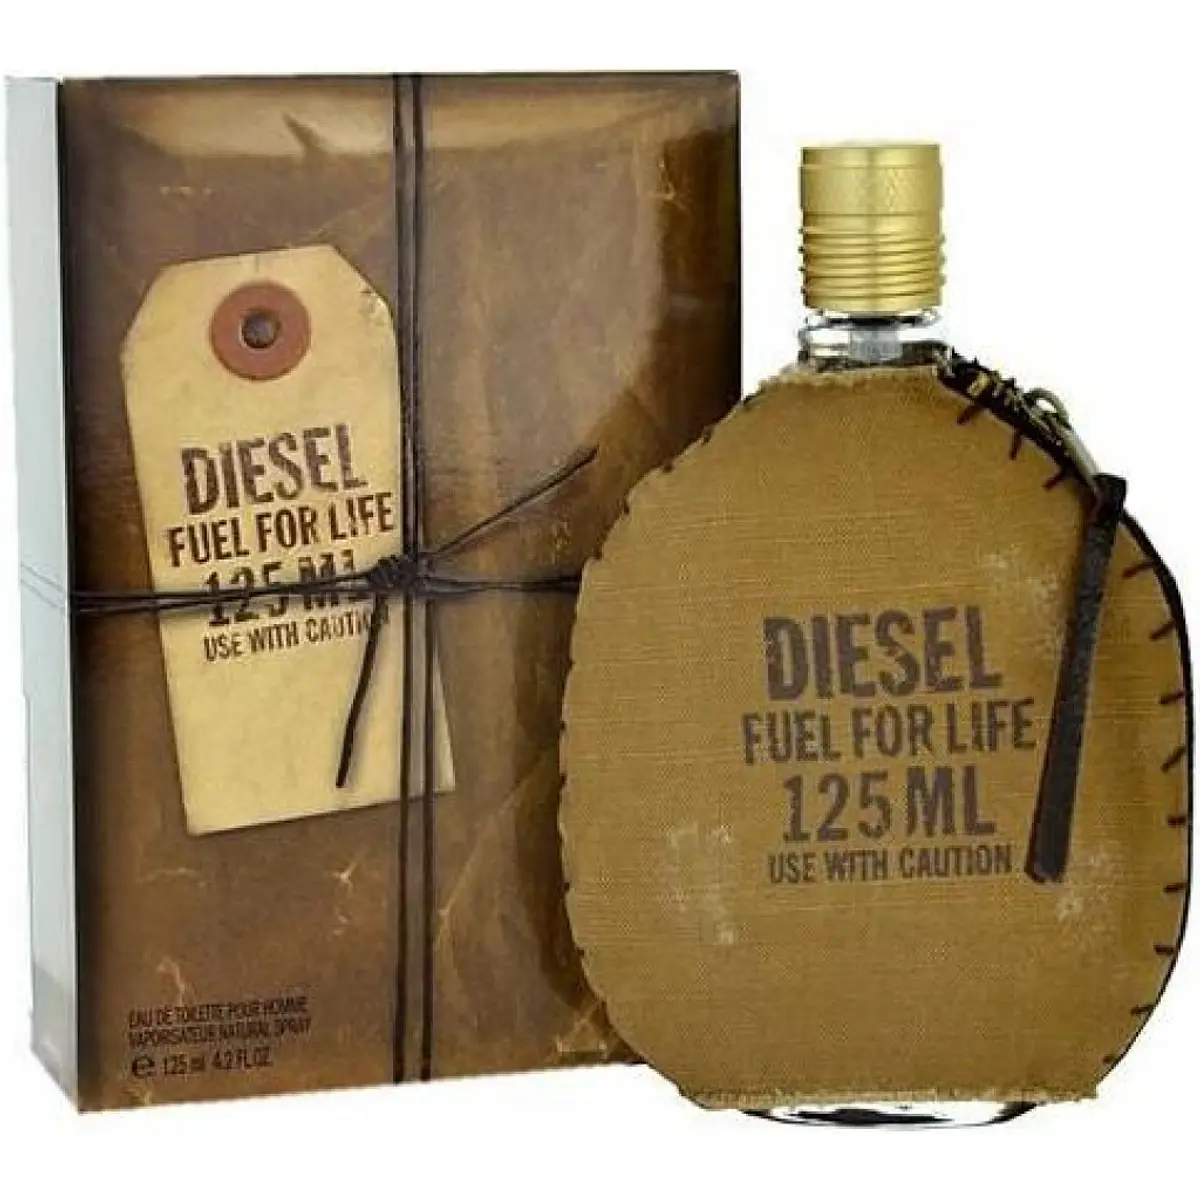   Diesel-Fuel-For-Life-perfume